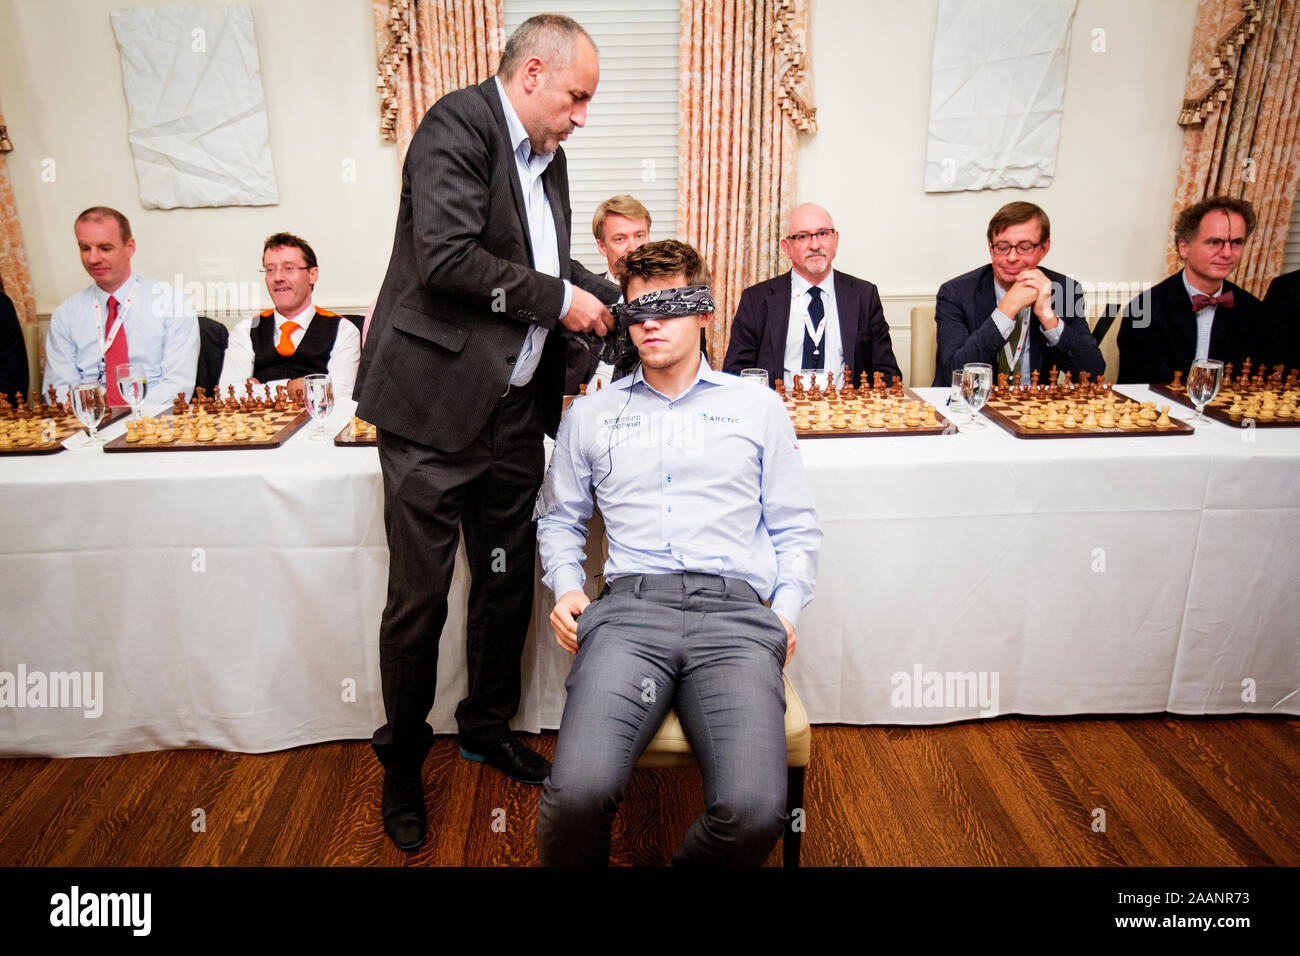 Norway's Magnus Carlsen wins FIDE world chess championship - Seattle Sports